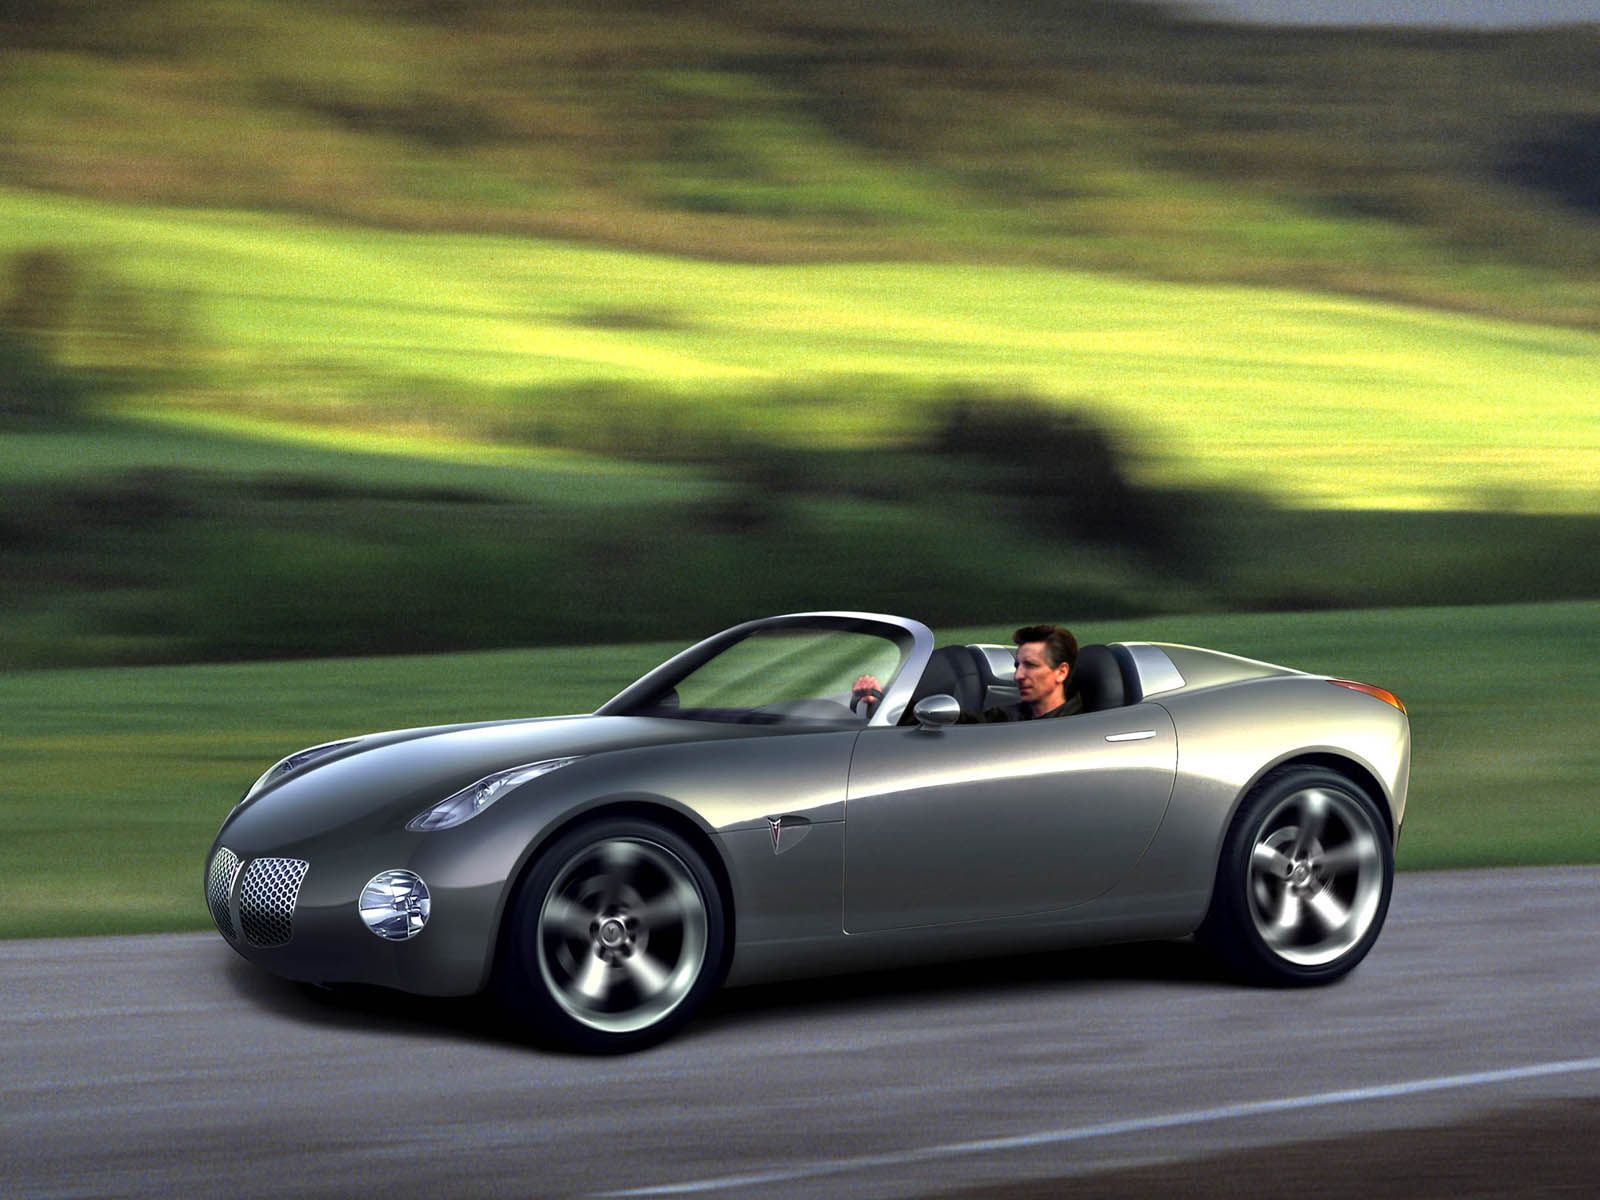 Car in pictures - car photo gallery " Pontiac Solstice Concept 2002 Ph...